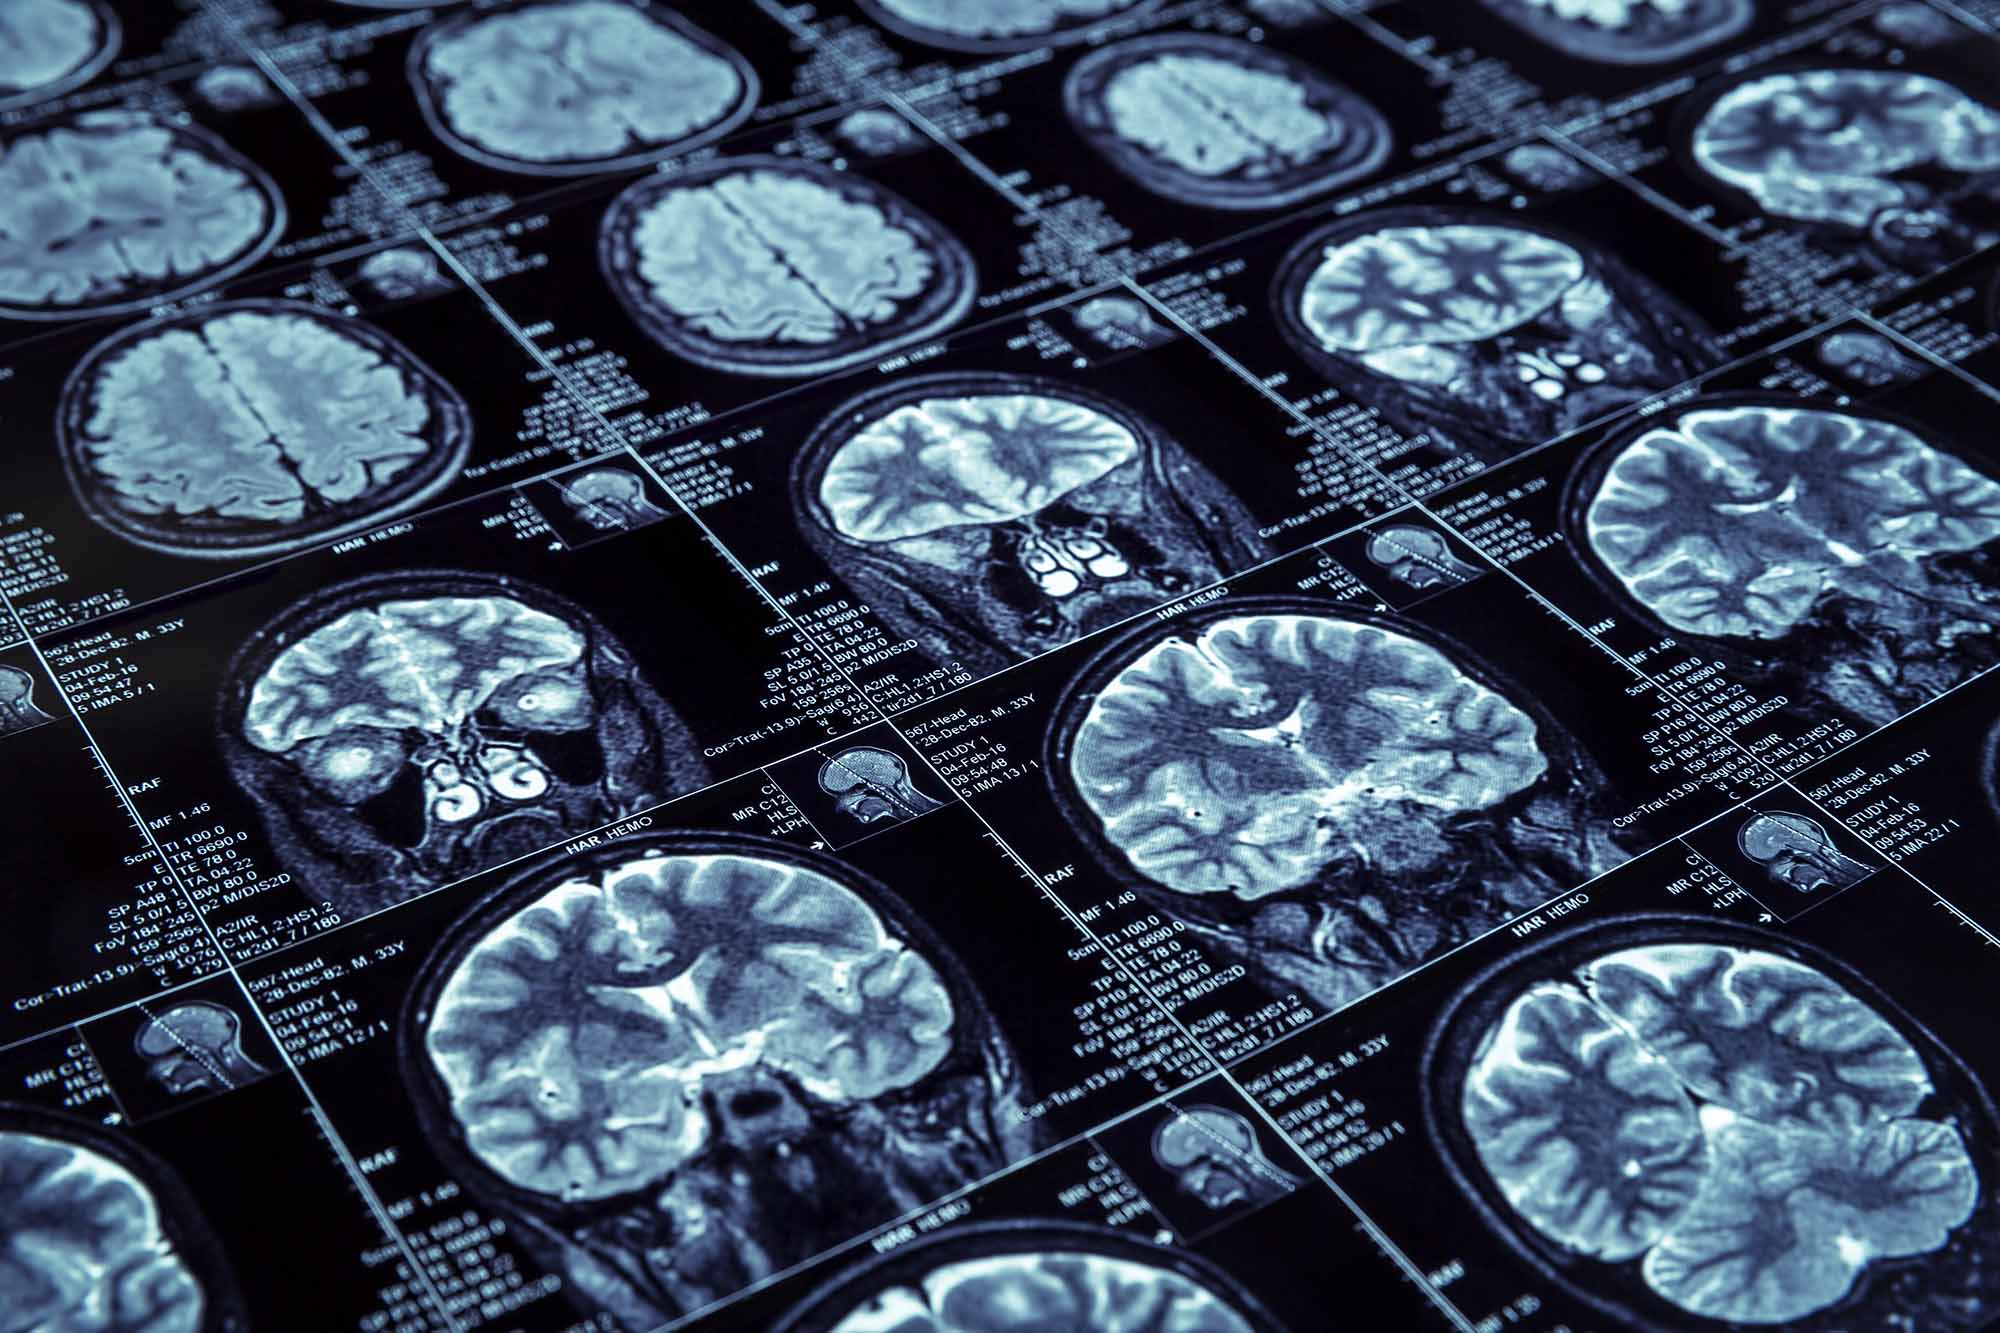 MRI brain scan images